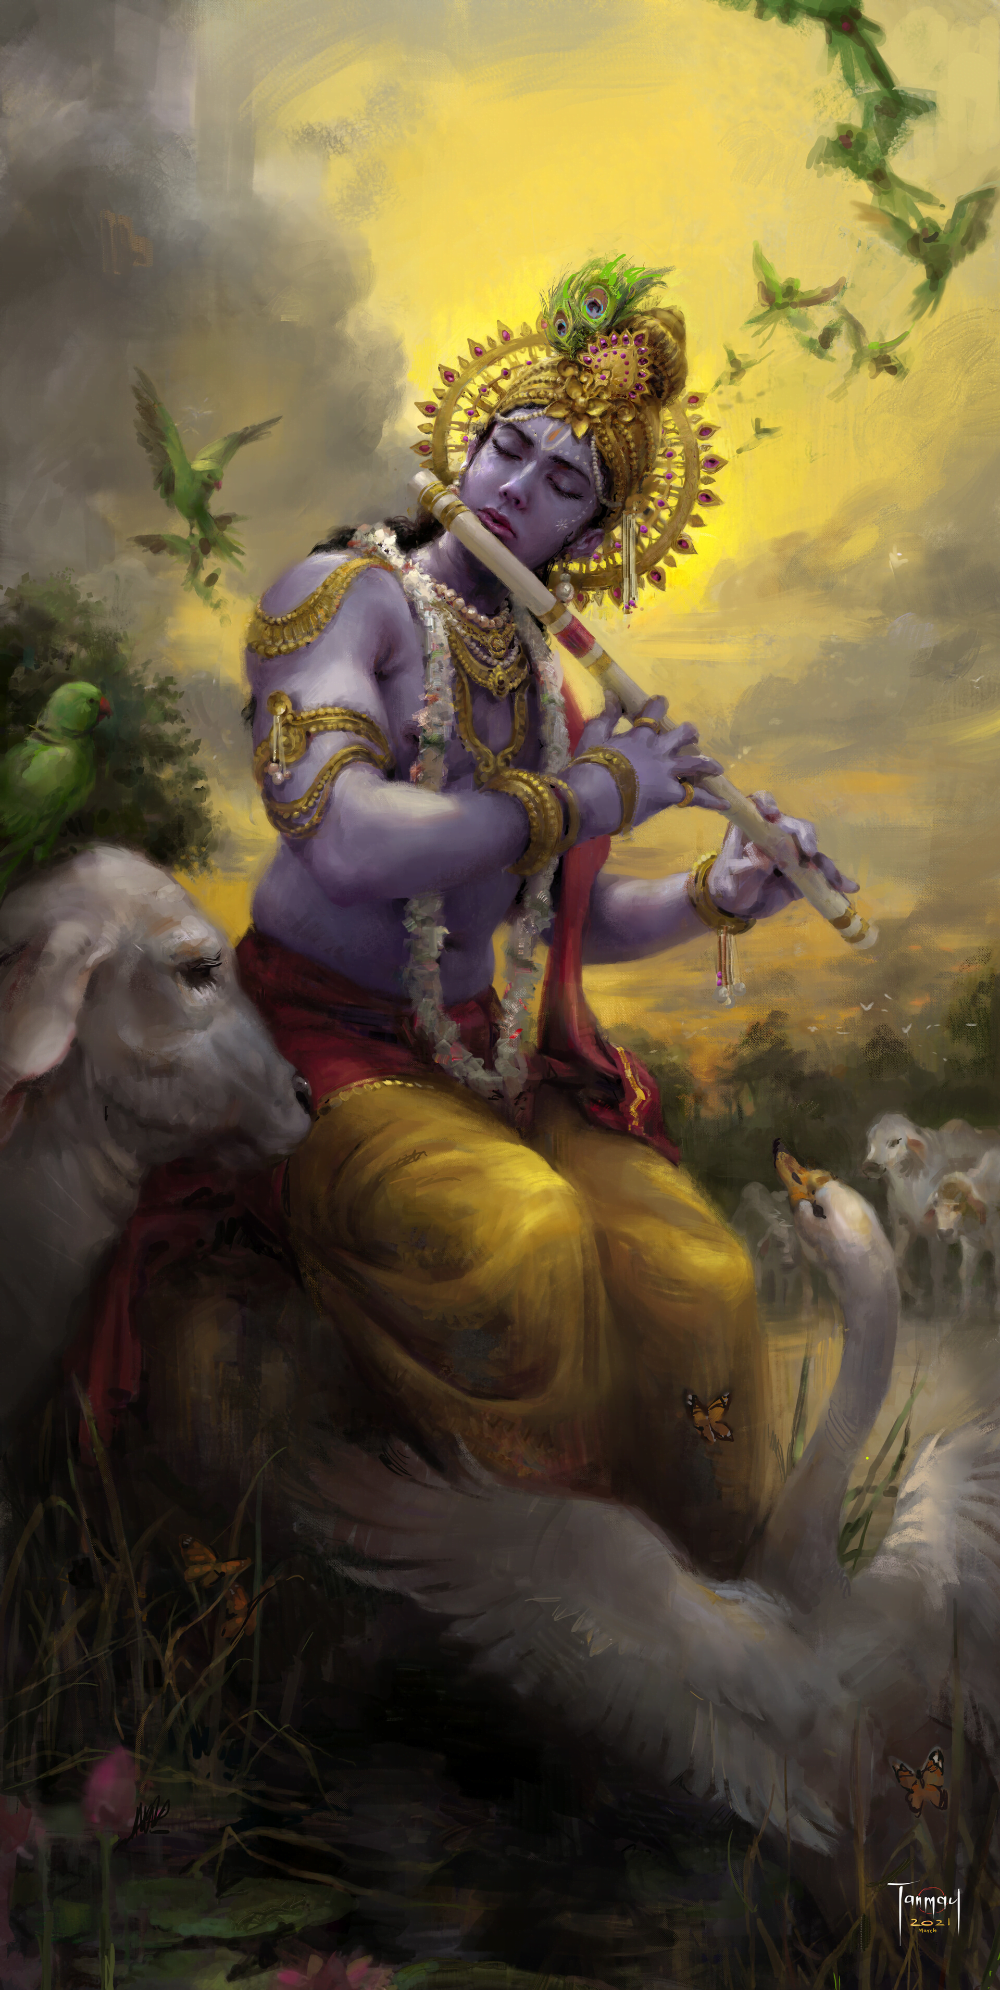 shri Krishna with his flute
